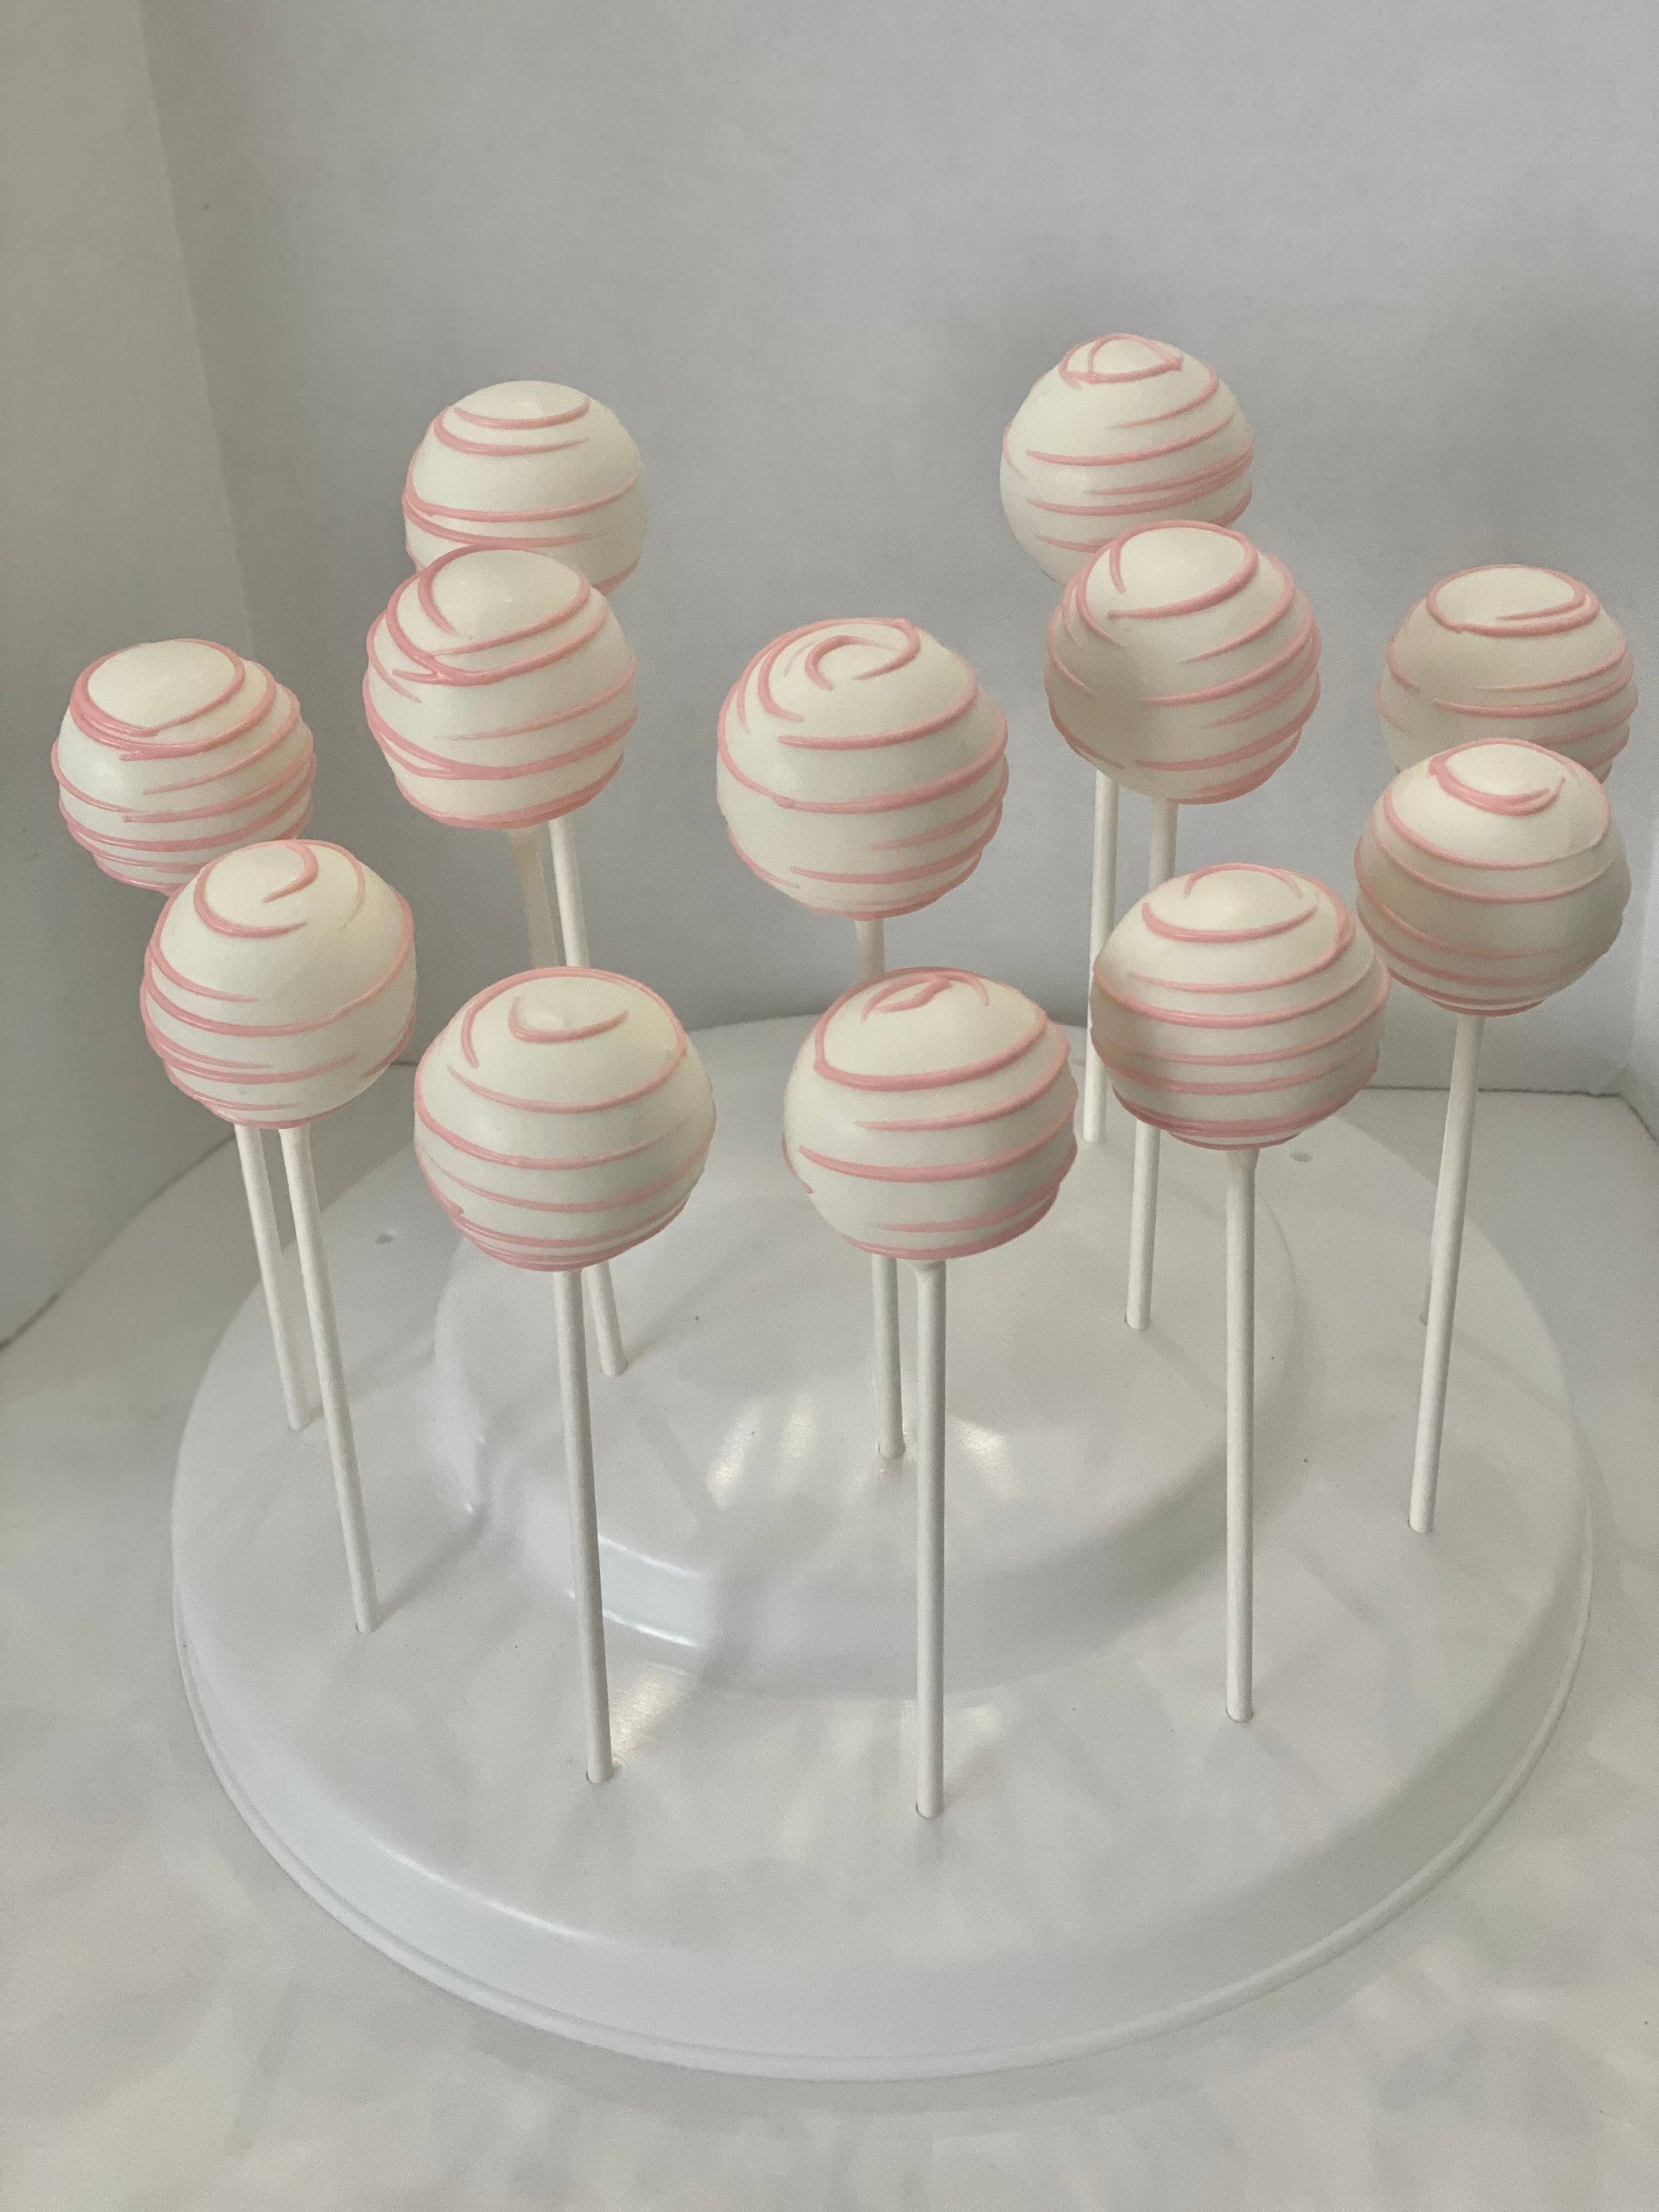 Sweet Creations Cake Pop Press White / Round Makes 5 Cake Balls at a Time  NIP